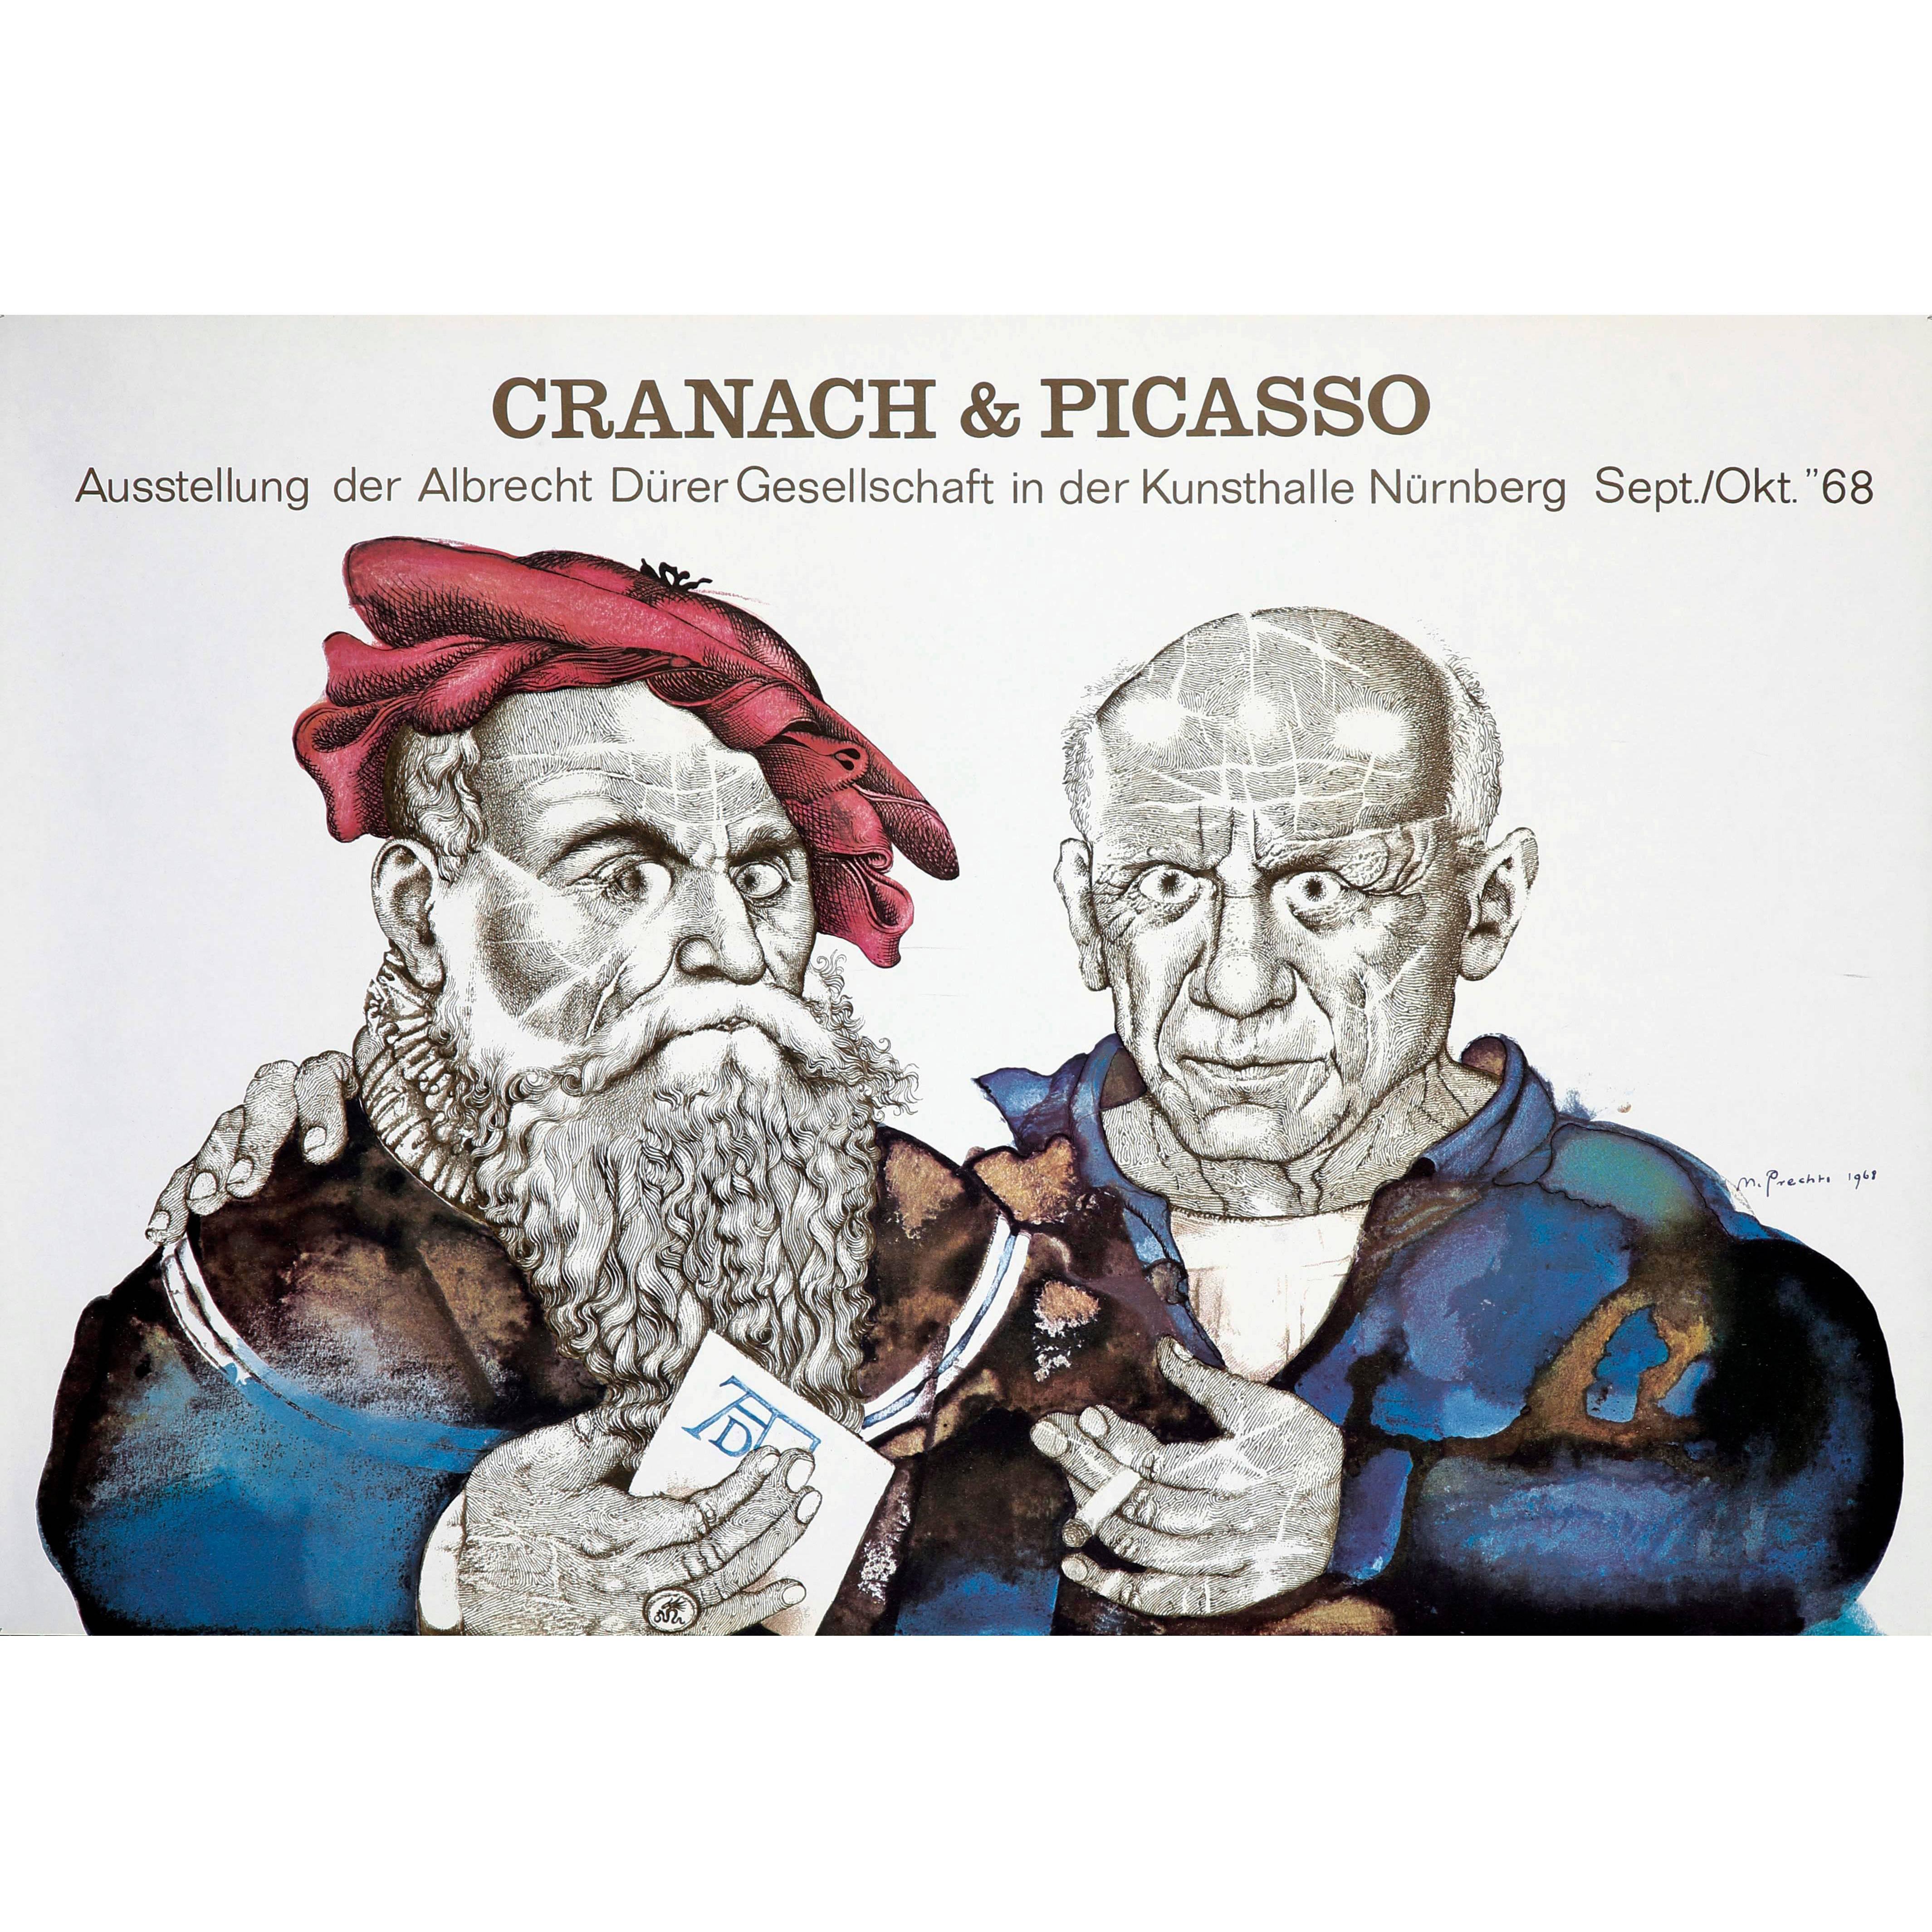 Cranach and Picasso by Michael Mathias Prechtl For Sale